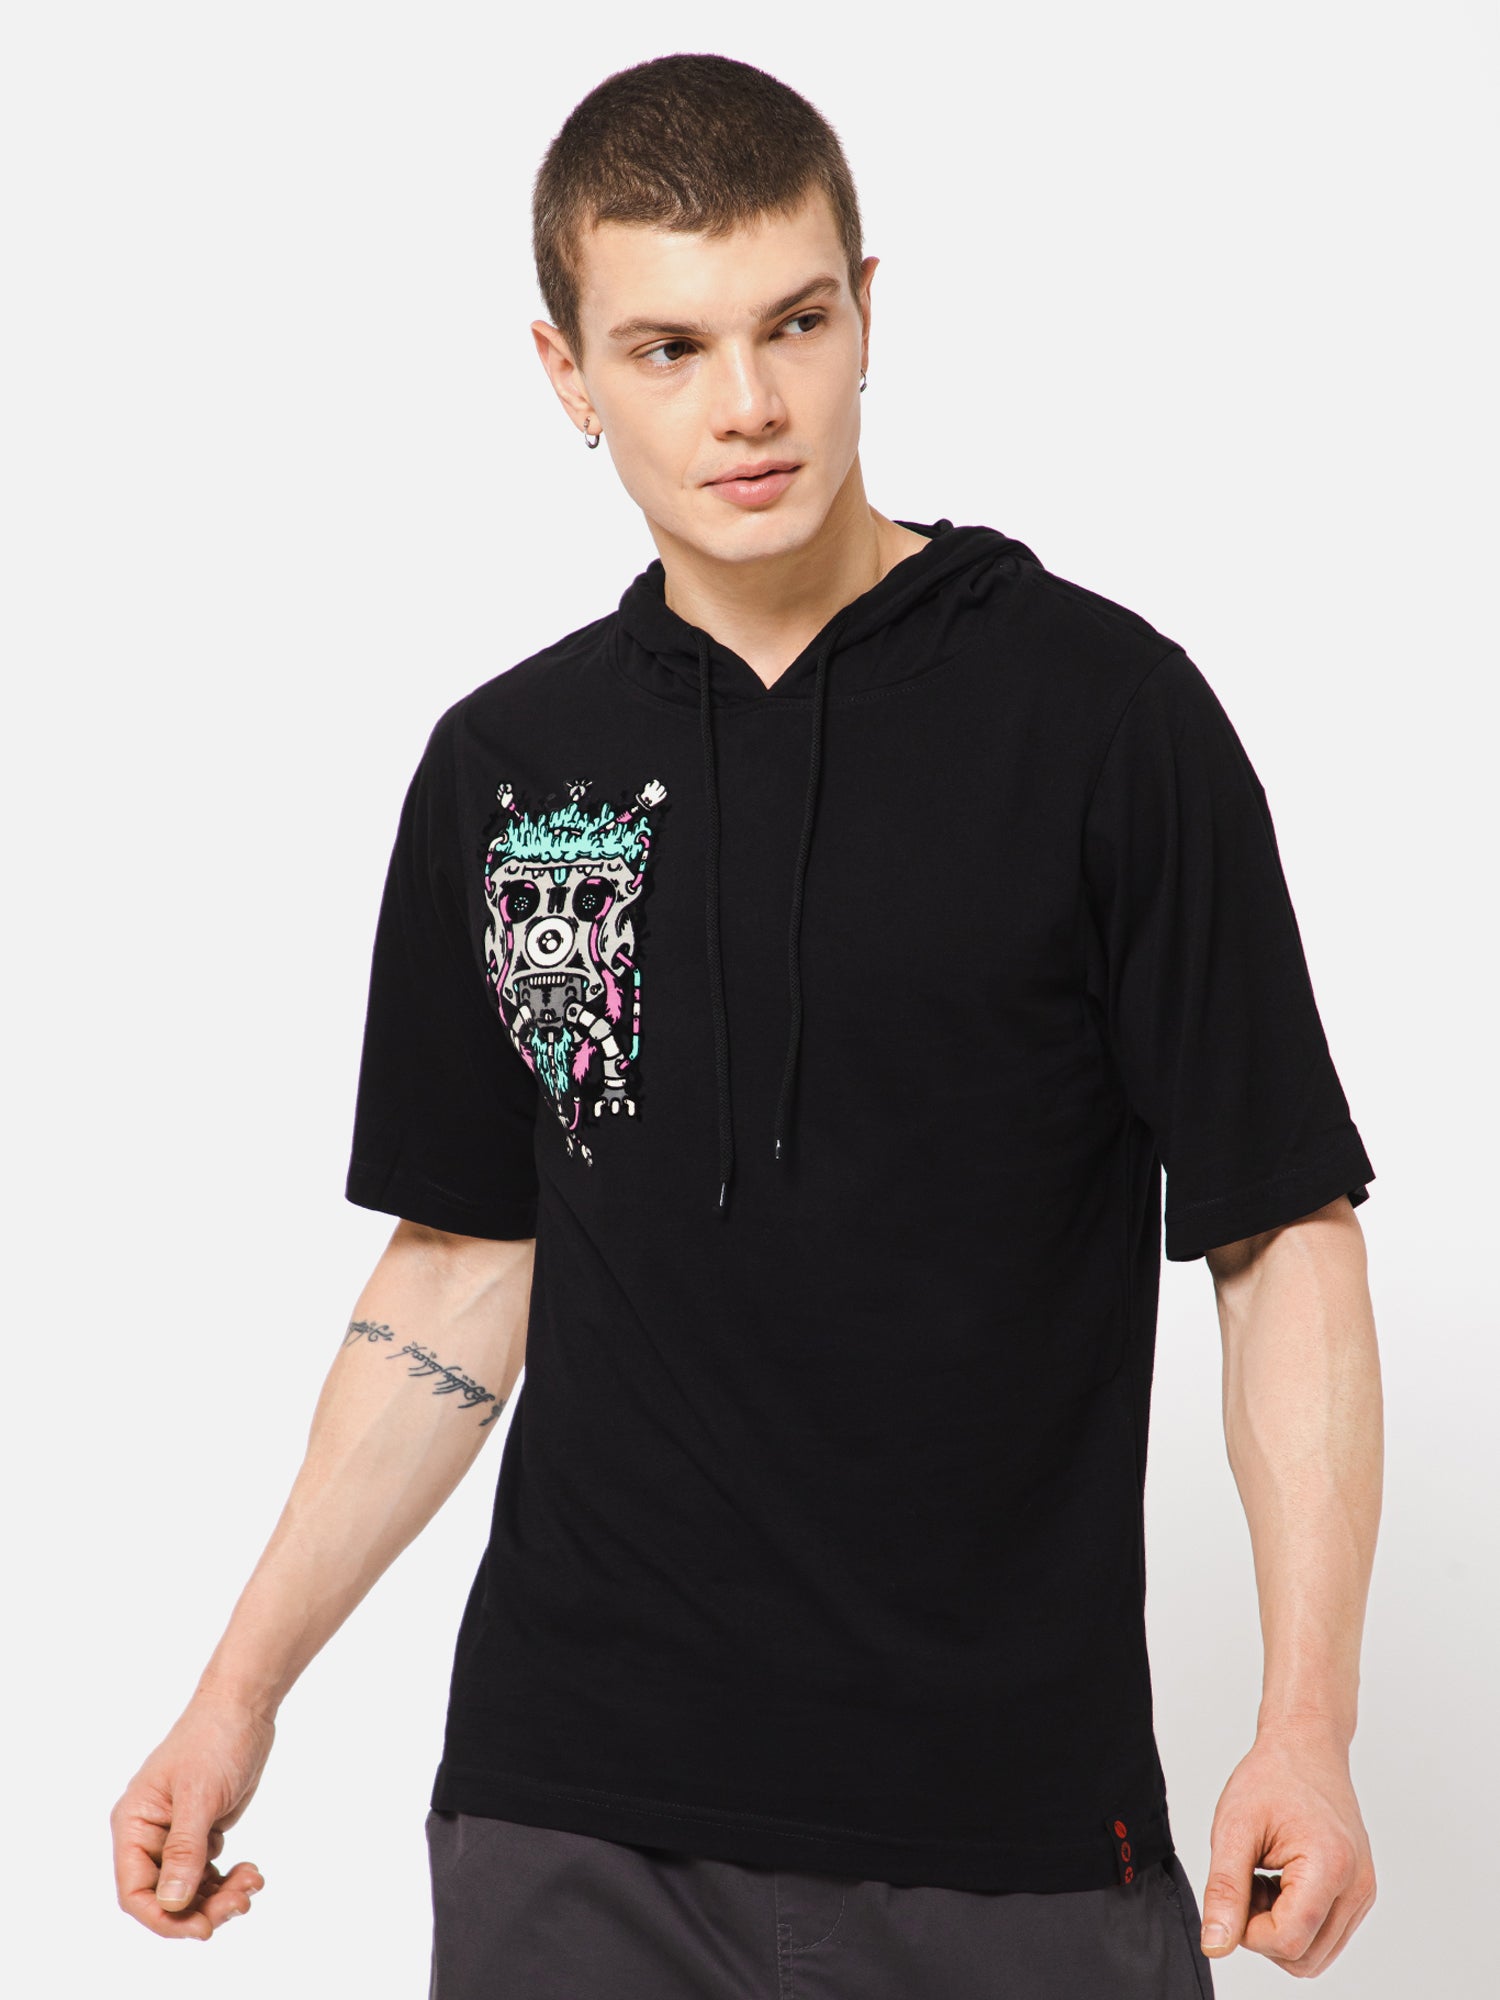 Punk INDUSTRIAL POP Black Oversized Hoodie T shirt